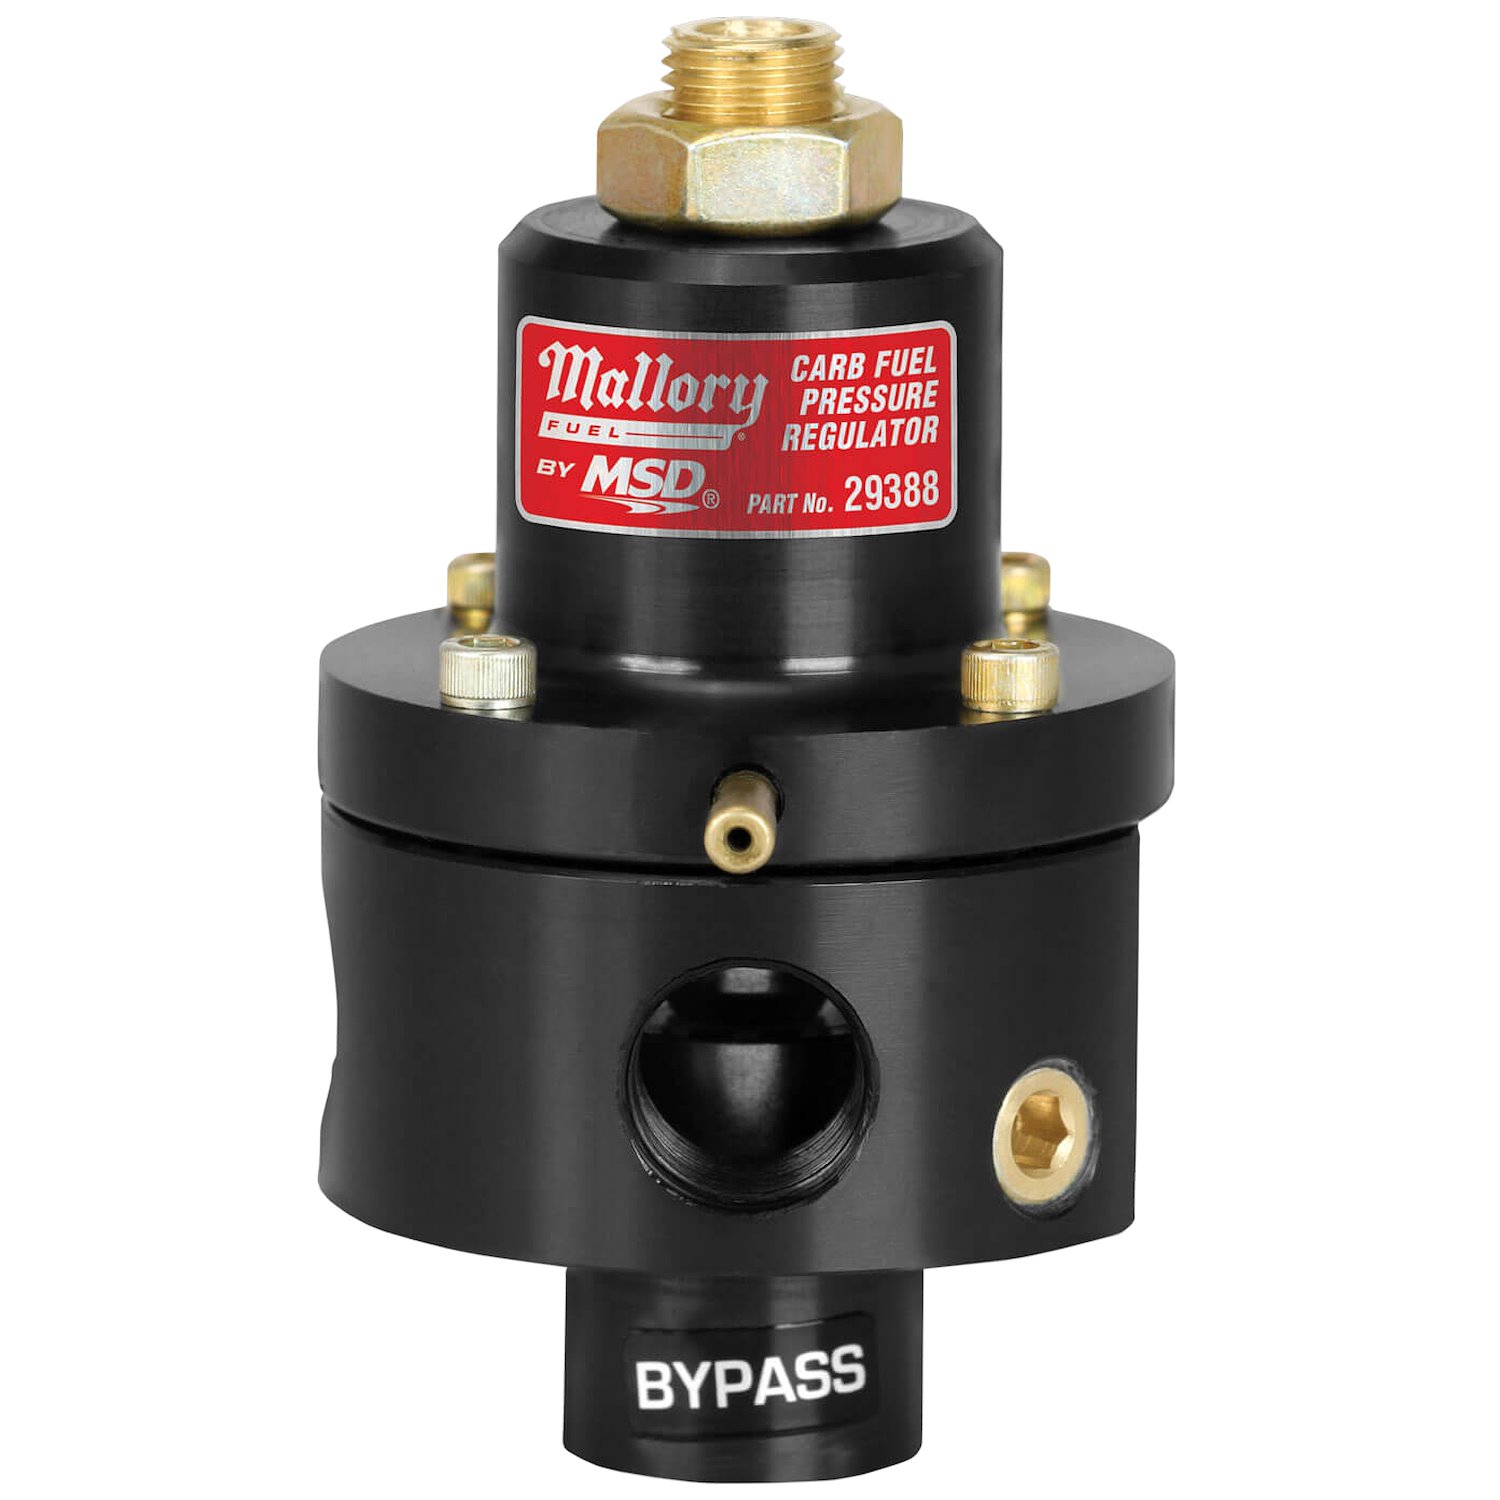 4-Port Bypass Fuel Pressure Regulator 200 GPH 3-25-psi